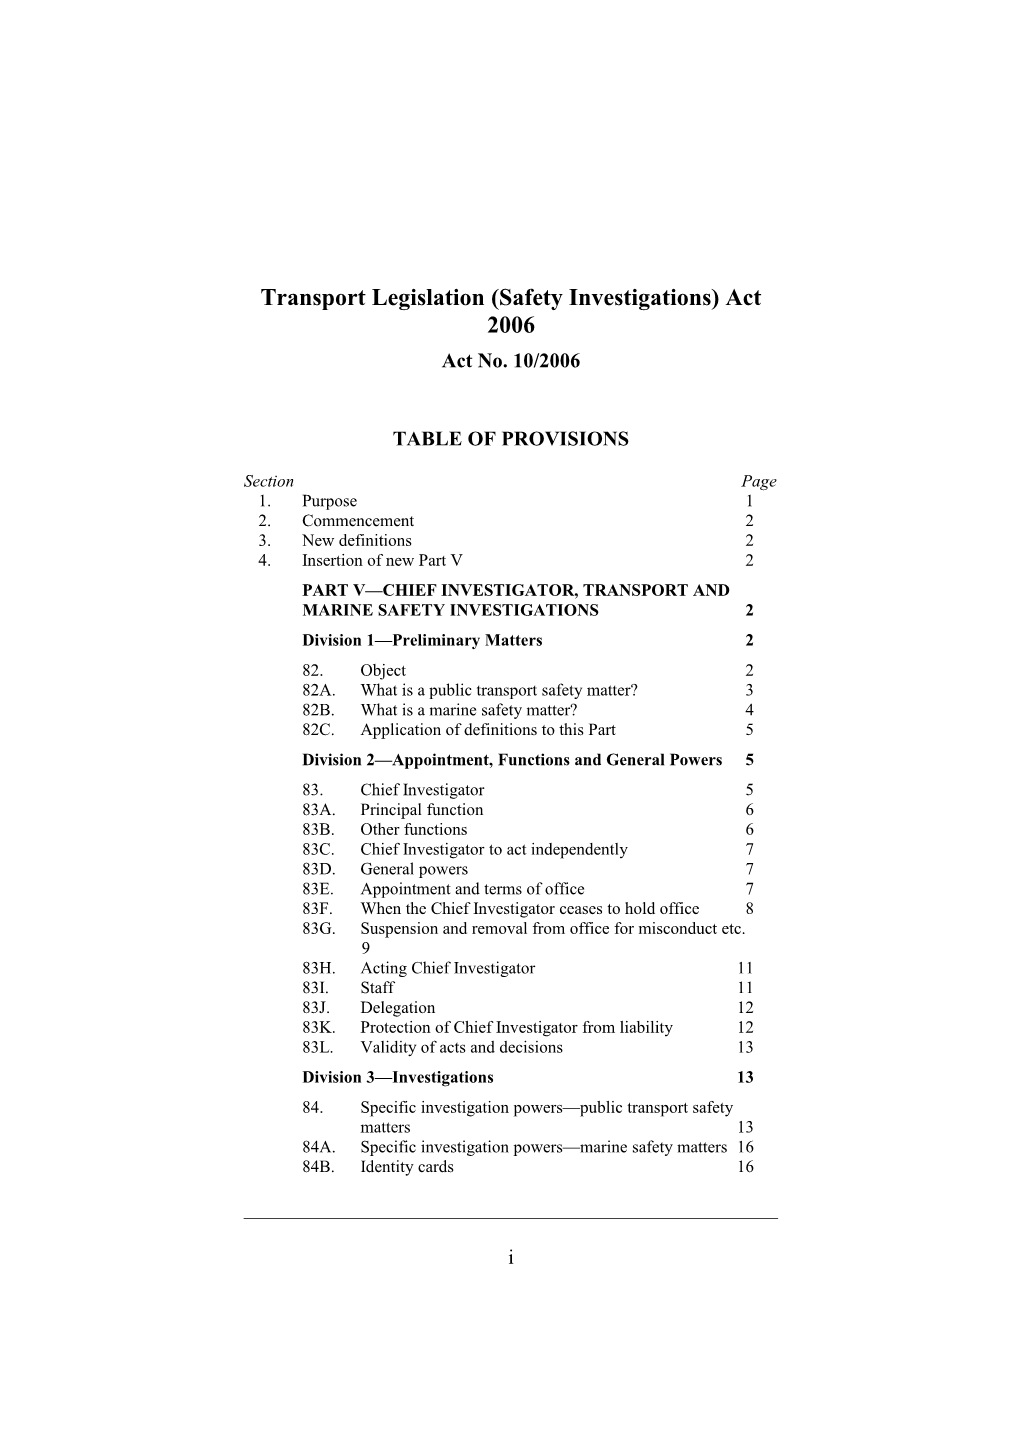 Transport Legislation (Safety Investigations) Act 2006